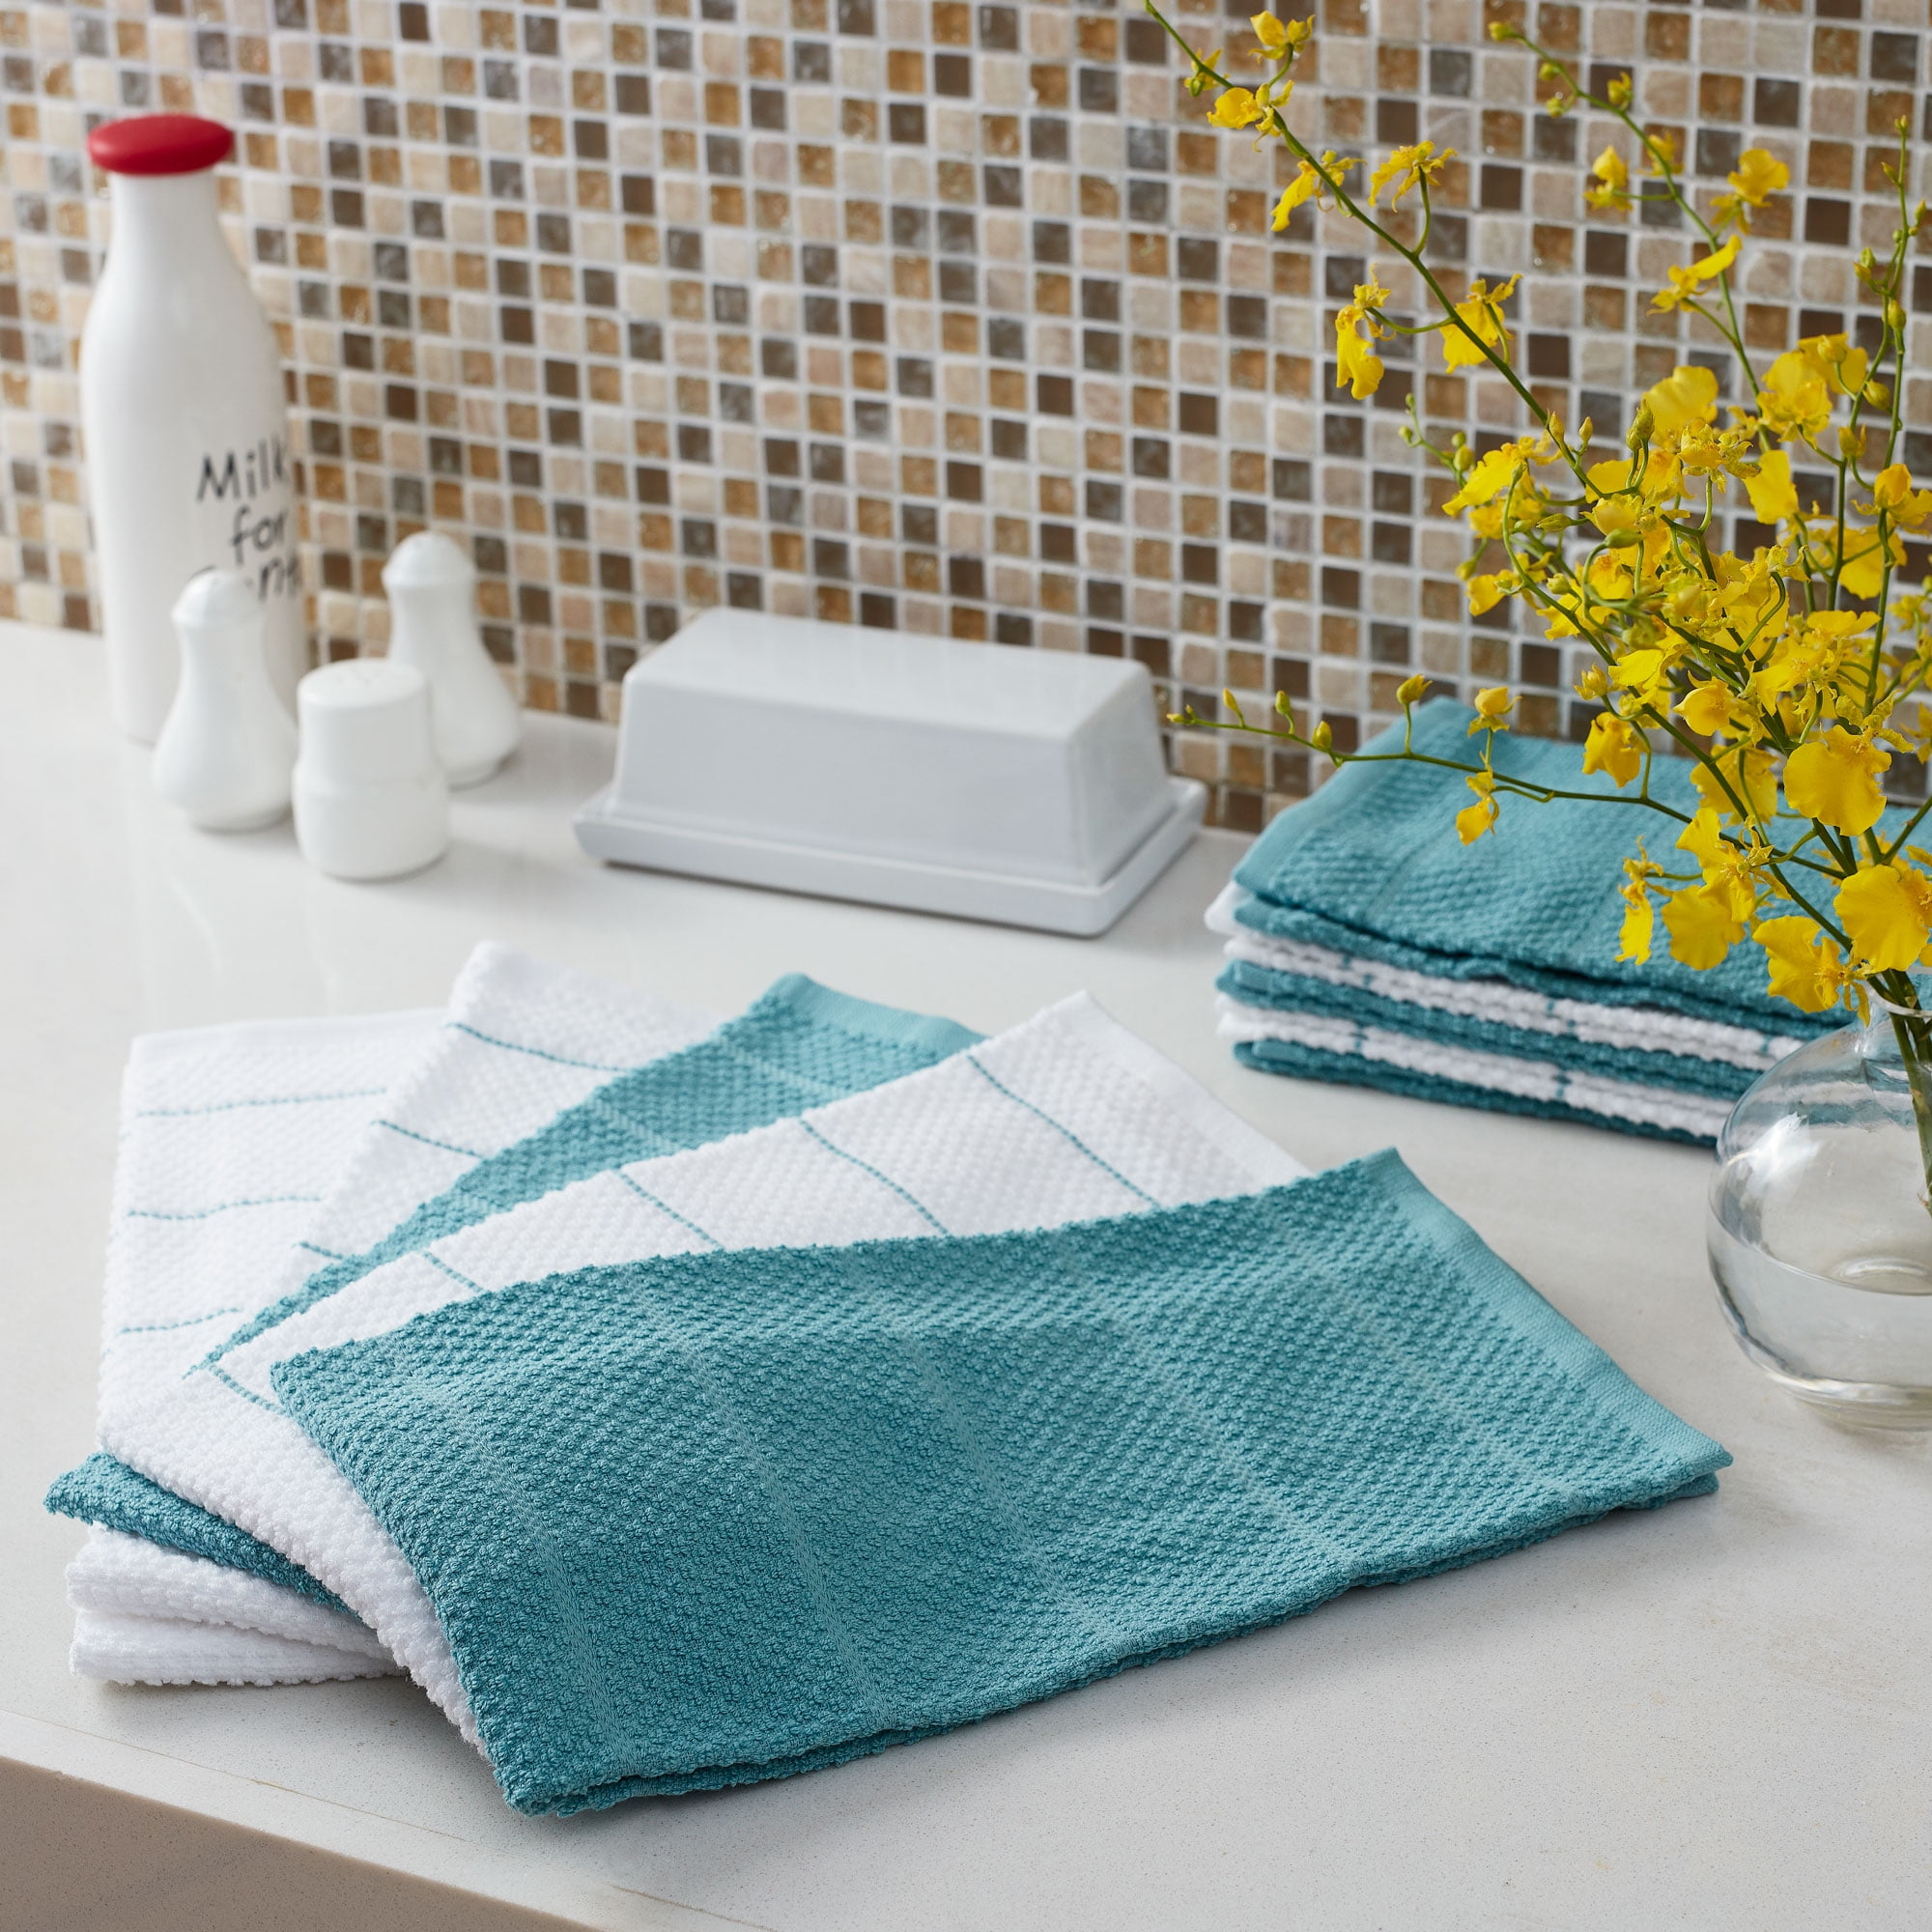 Mainstays Dobby Rice Weave Kitchen Towels, 15” x 25”, Set of 10, Topaz Blue